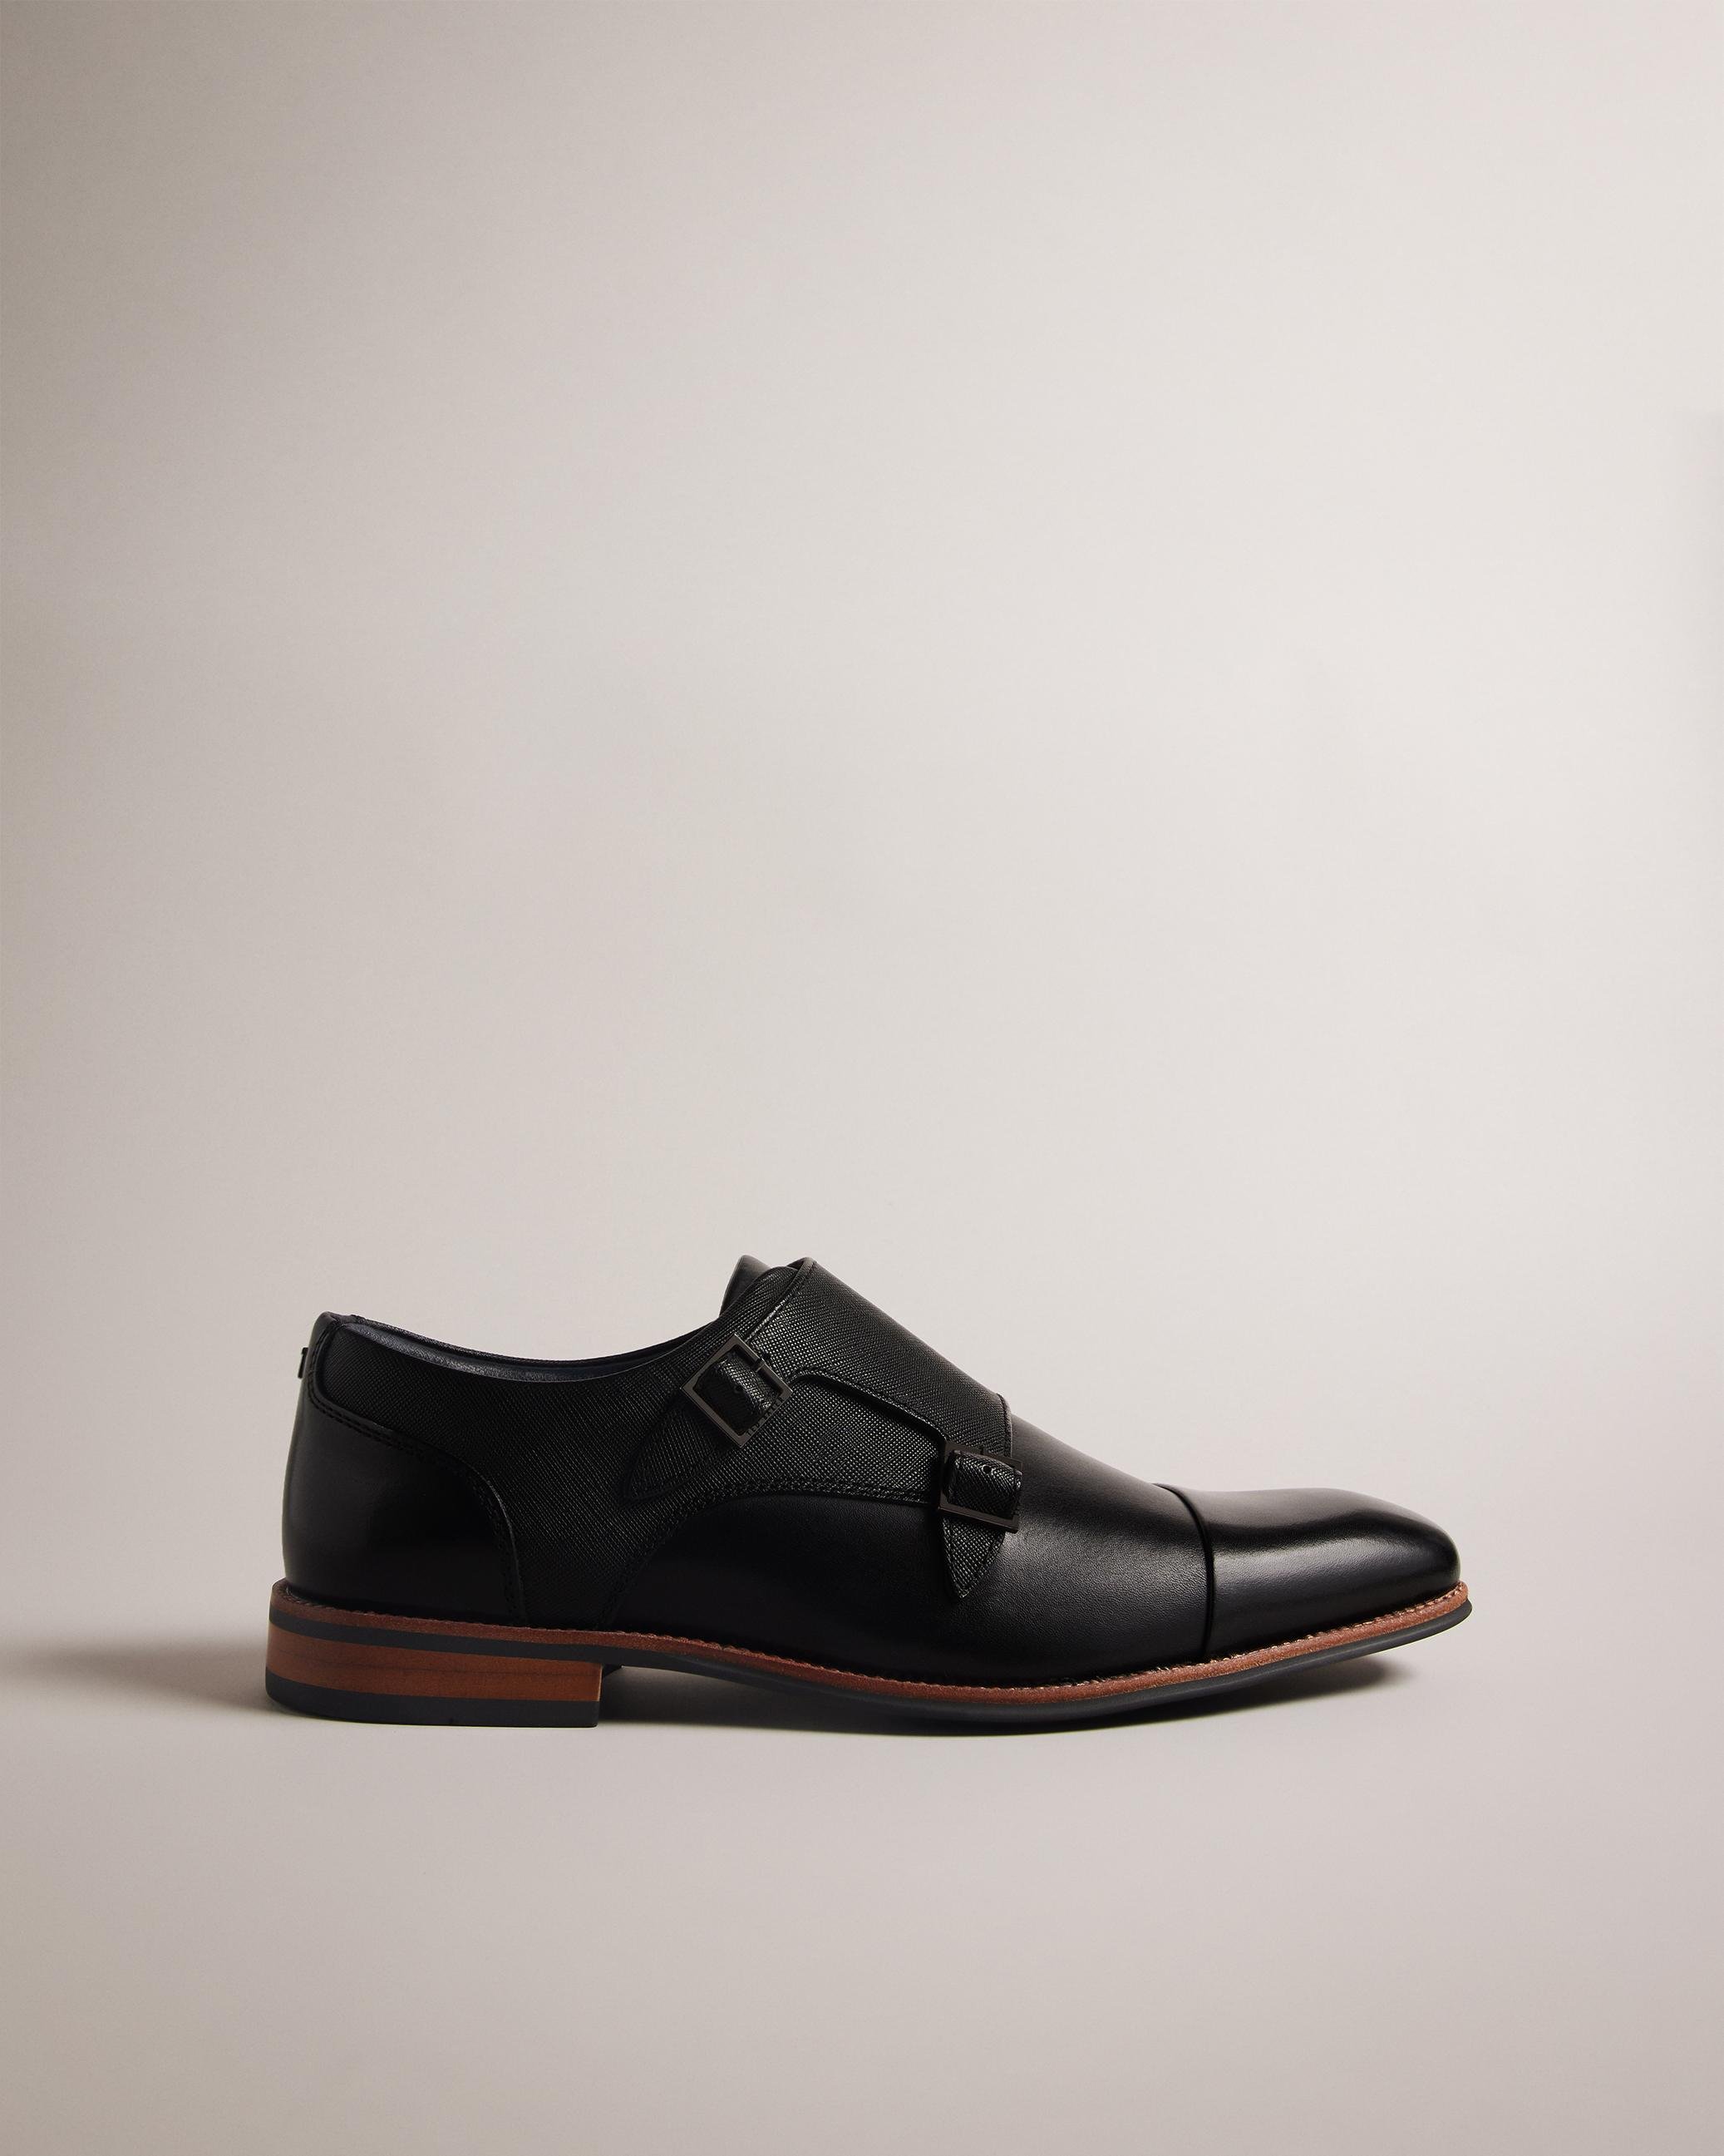 Double Monk Formal Shoe - ALICOTT - Black by TED BAKER